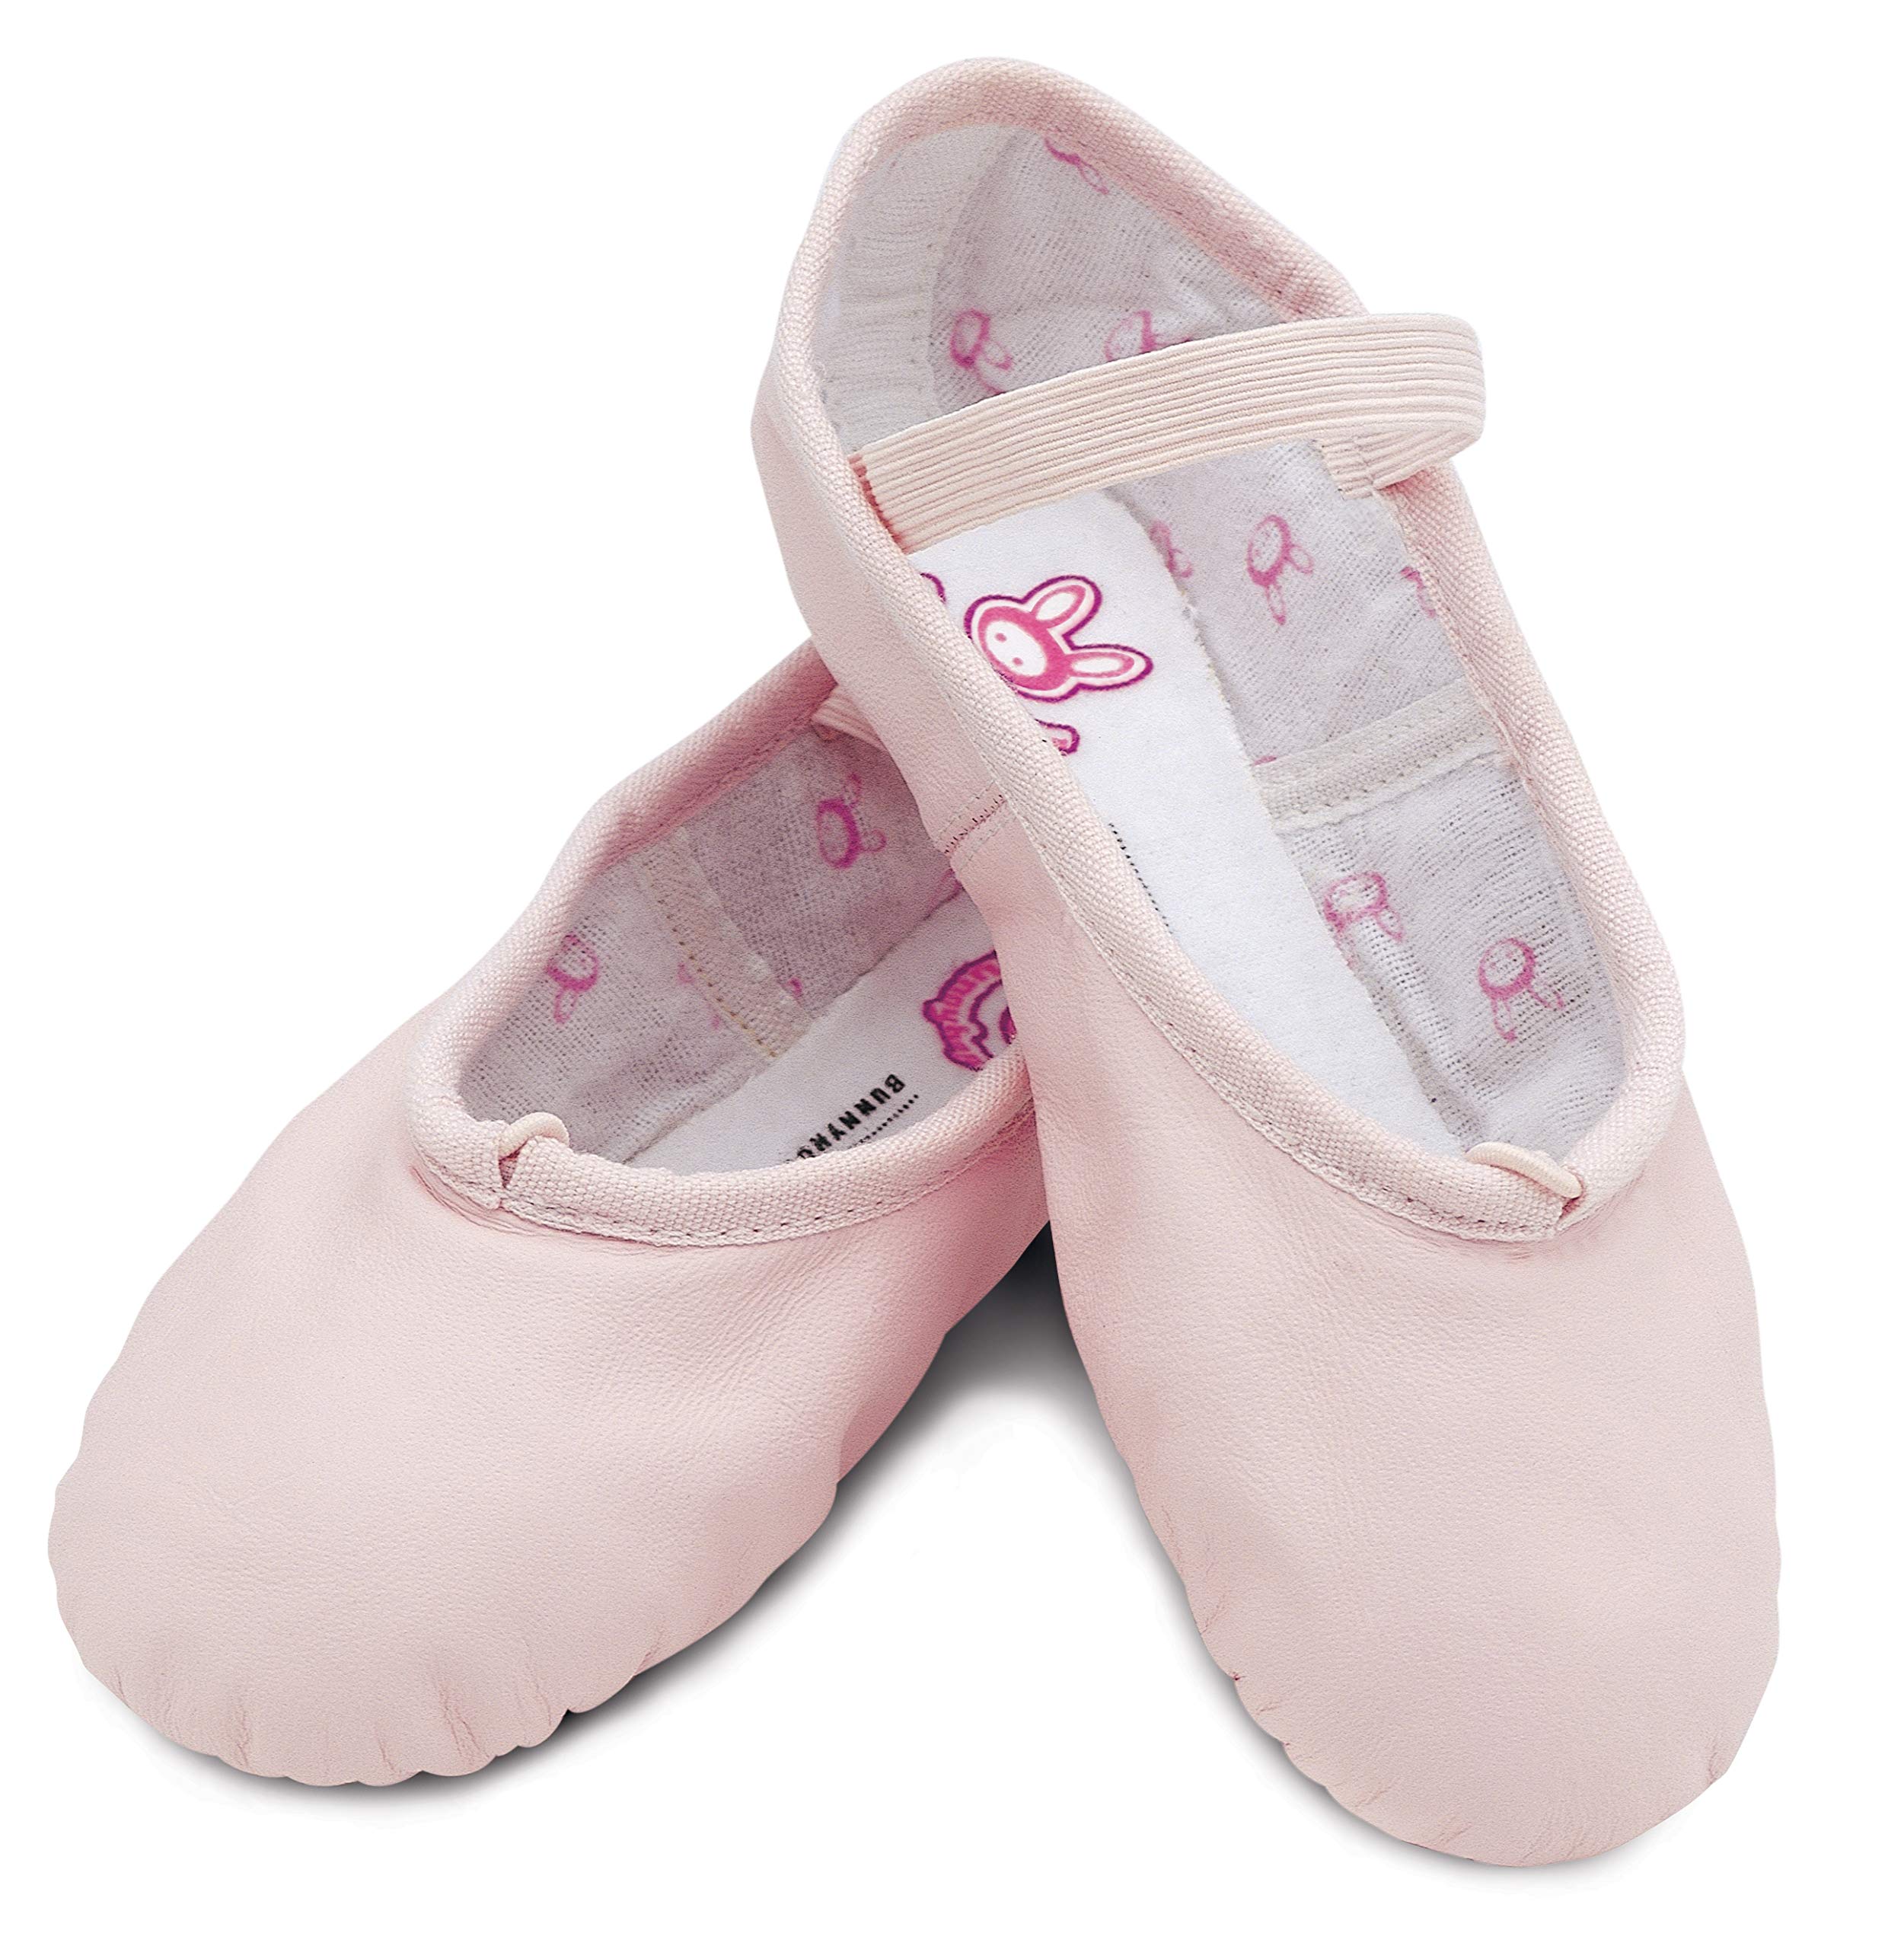 Bloch Dance Bunnyhop Ballet Slipper (Toddler/Little Kid) Little Kid (4-8 Years), Pink - 7 C US Little Kid